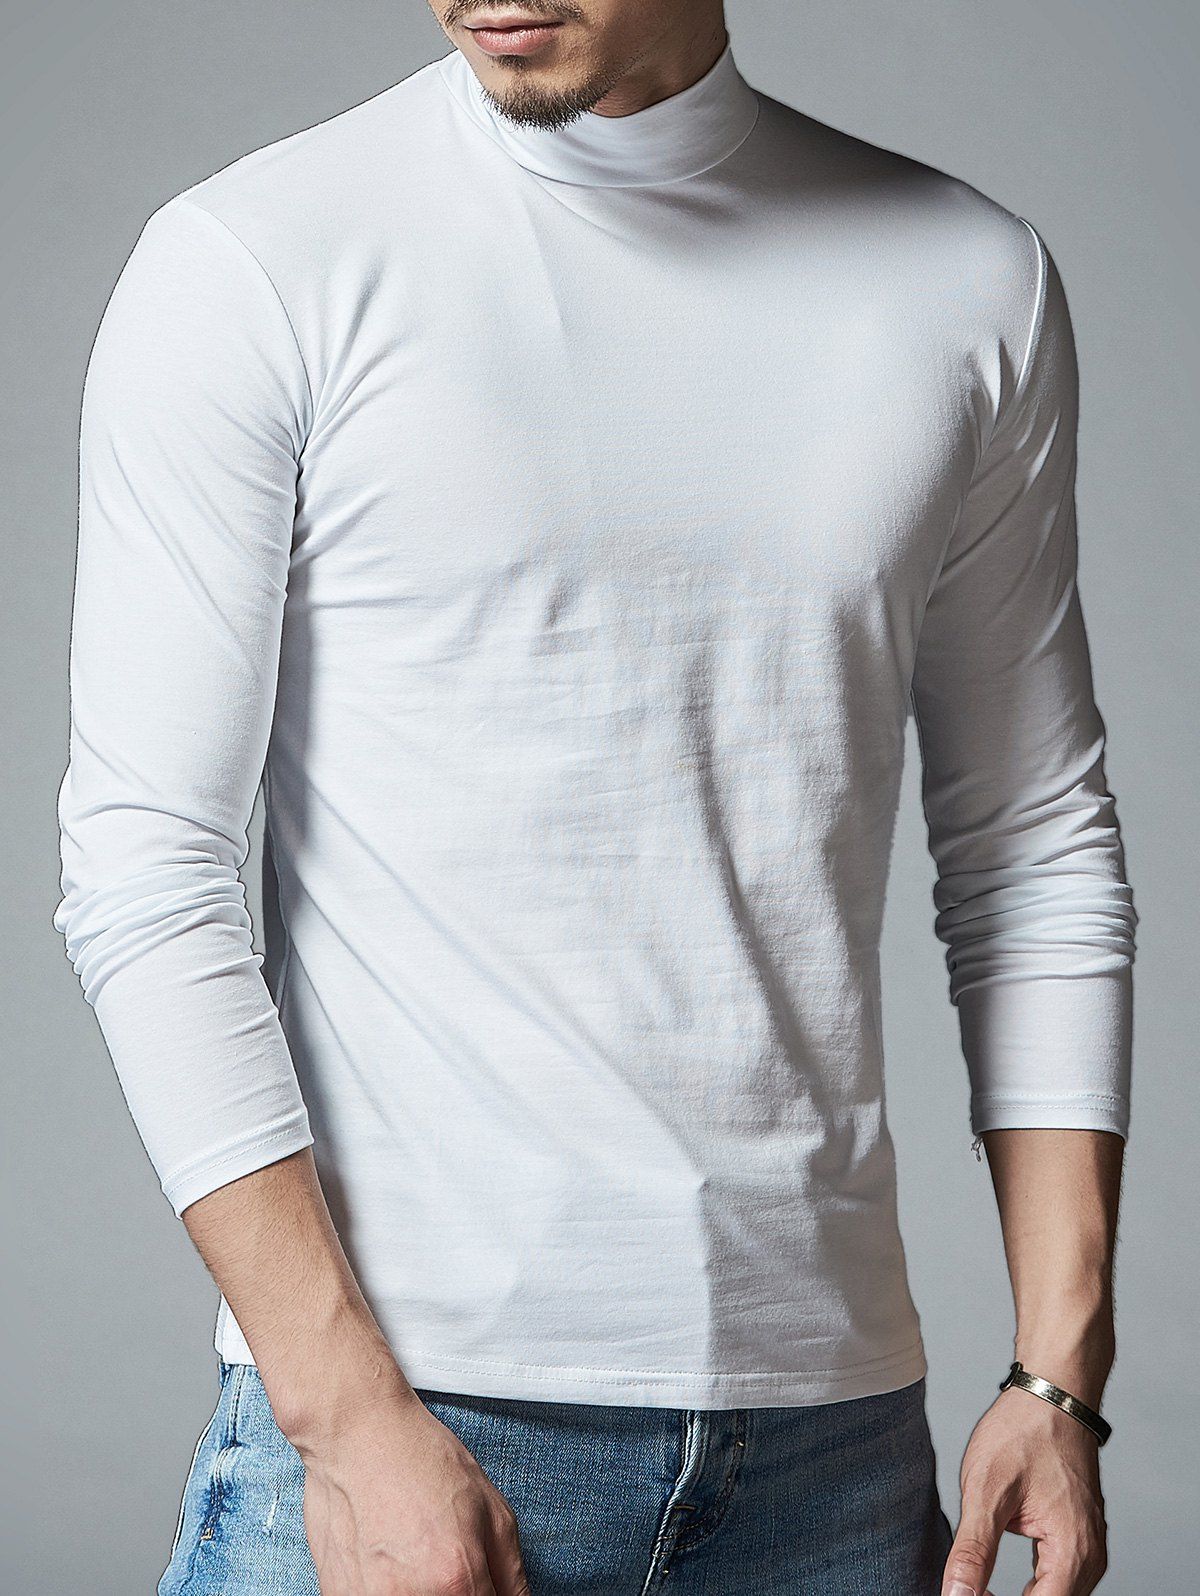 Download 41% OFF 2020 Stretch Mock Neck Long Sleeve T-shirt In WHITE | DressLily